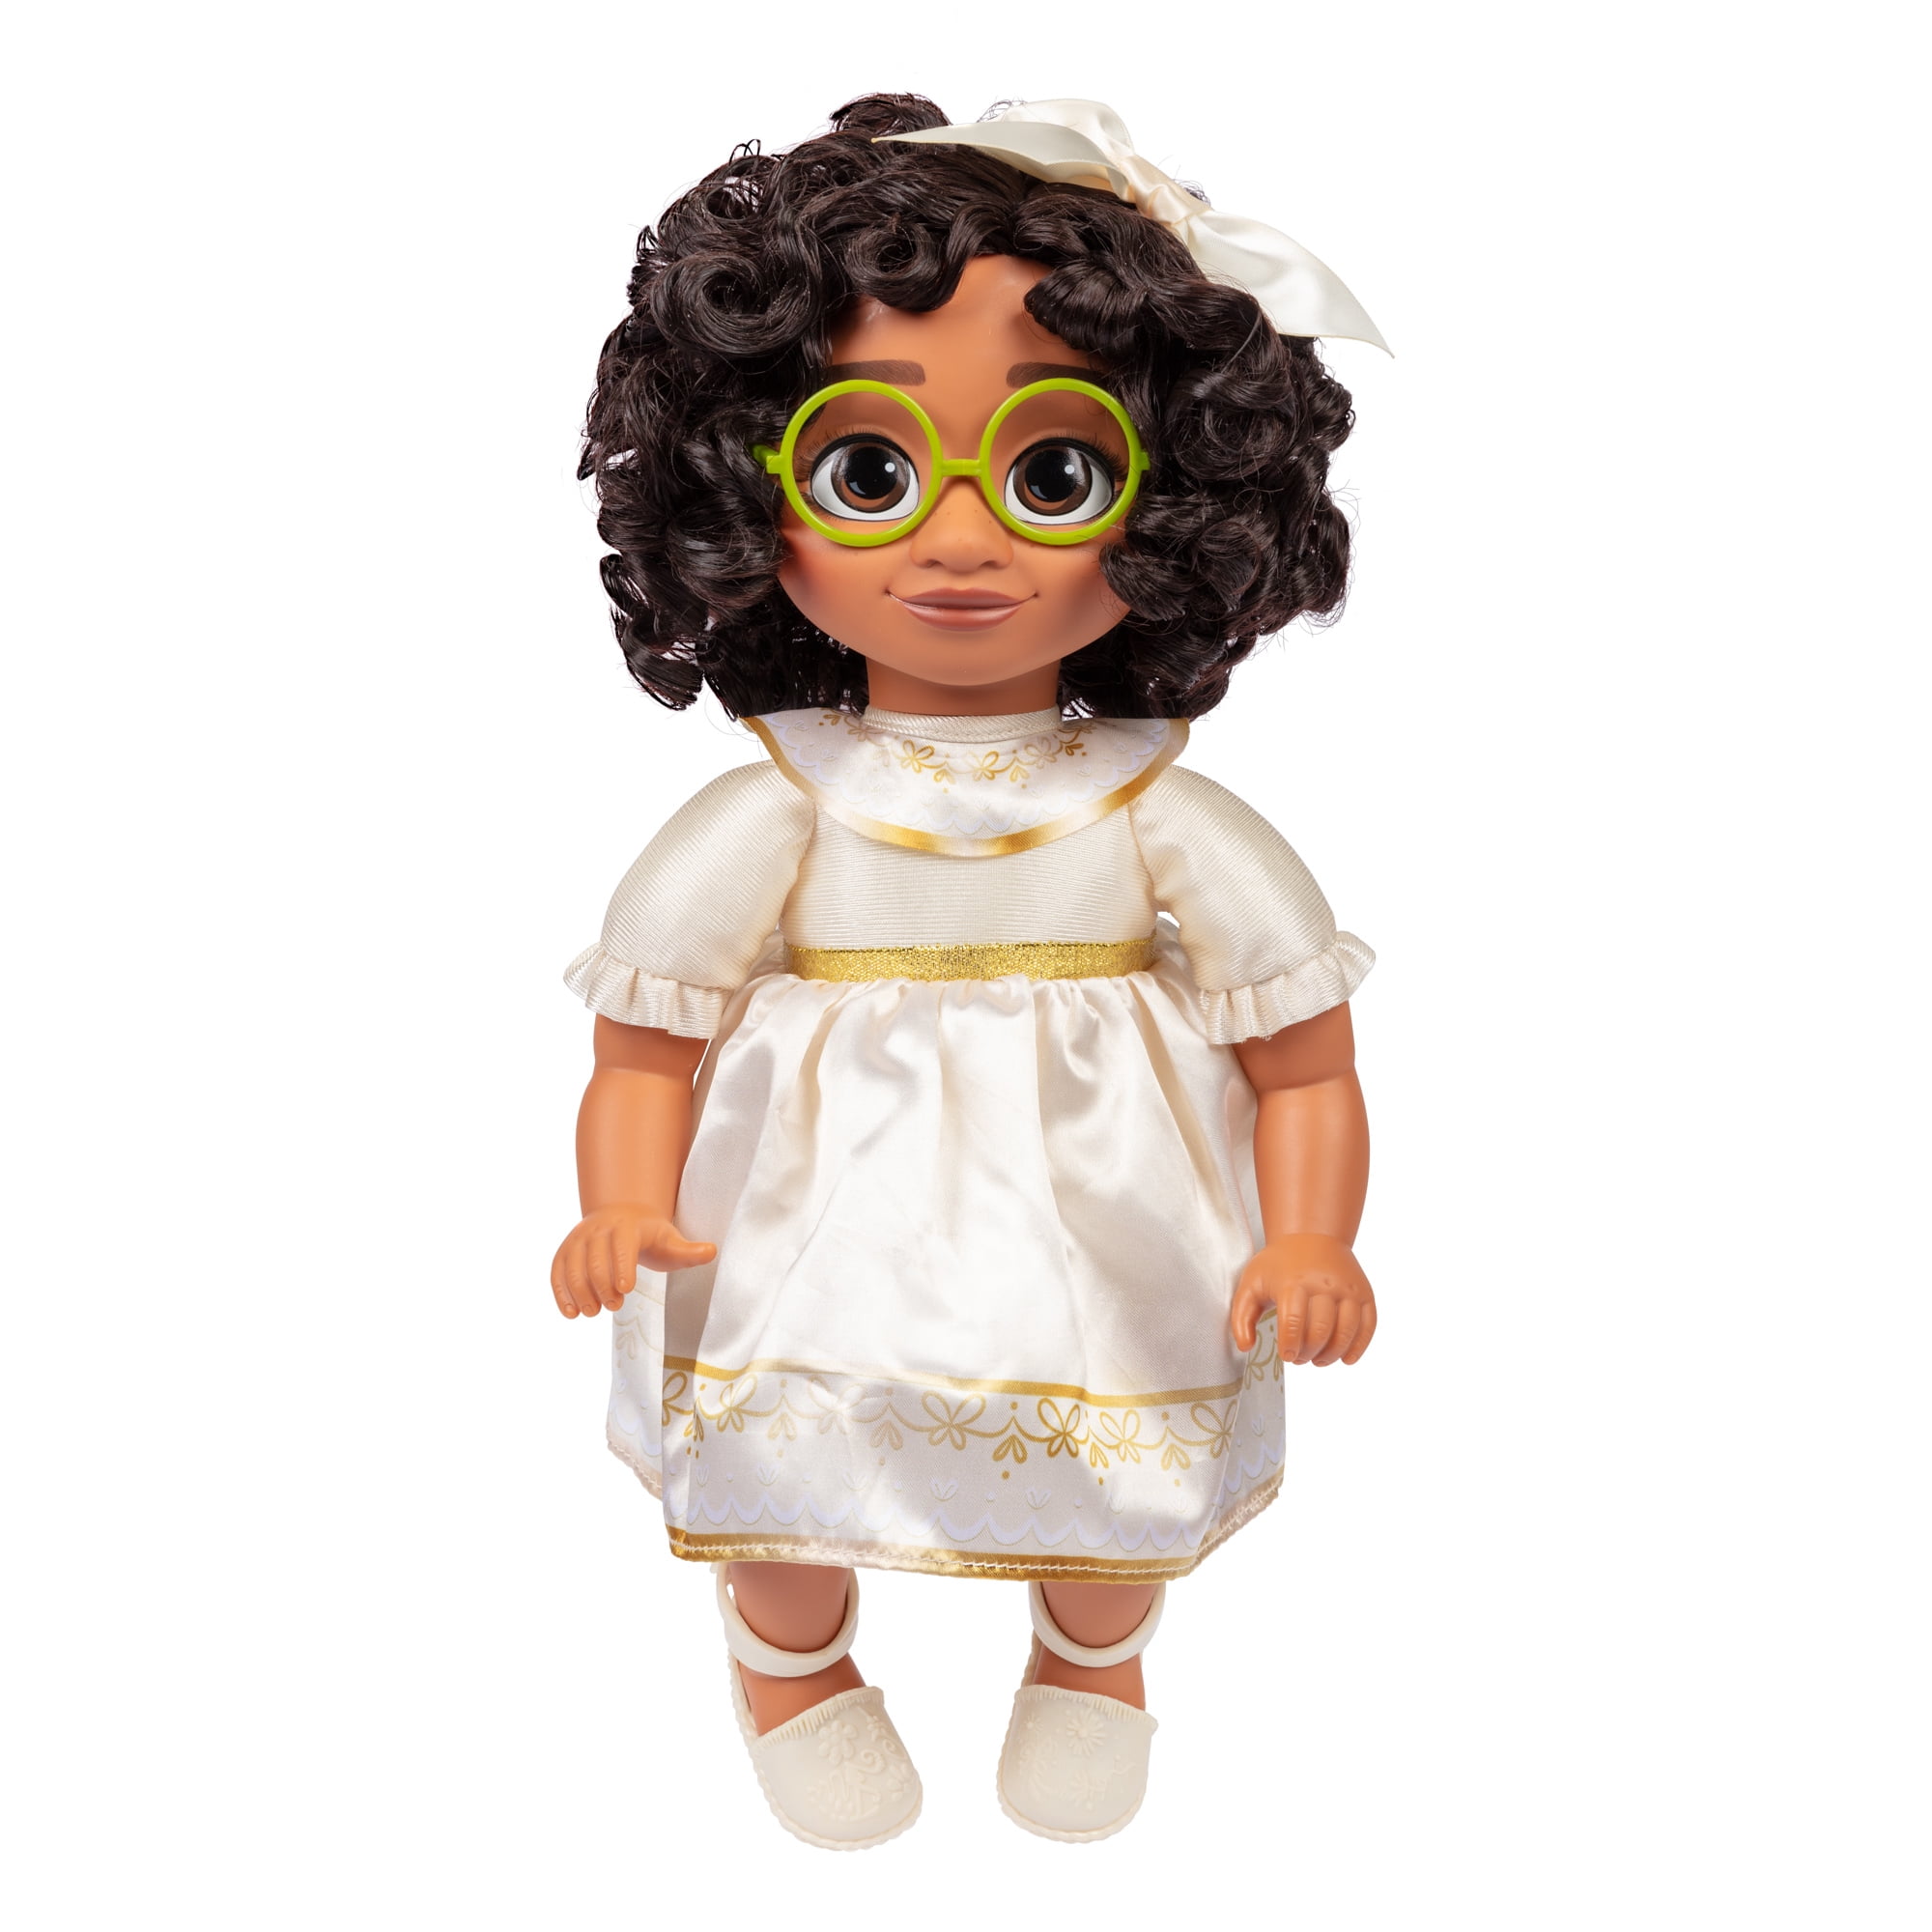 Mattel Introduces New Diverse Ken Dolls; Hopes To Reverse Sales